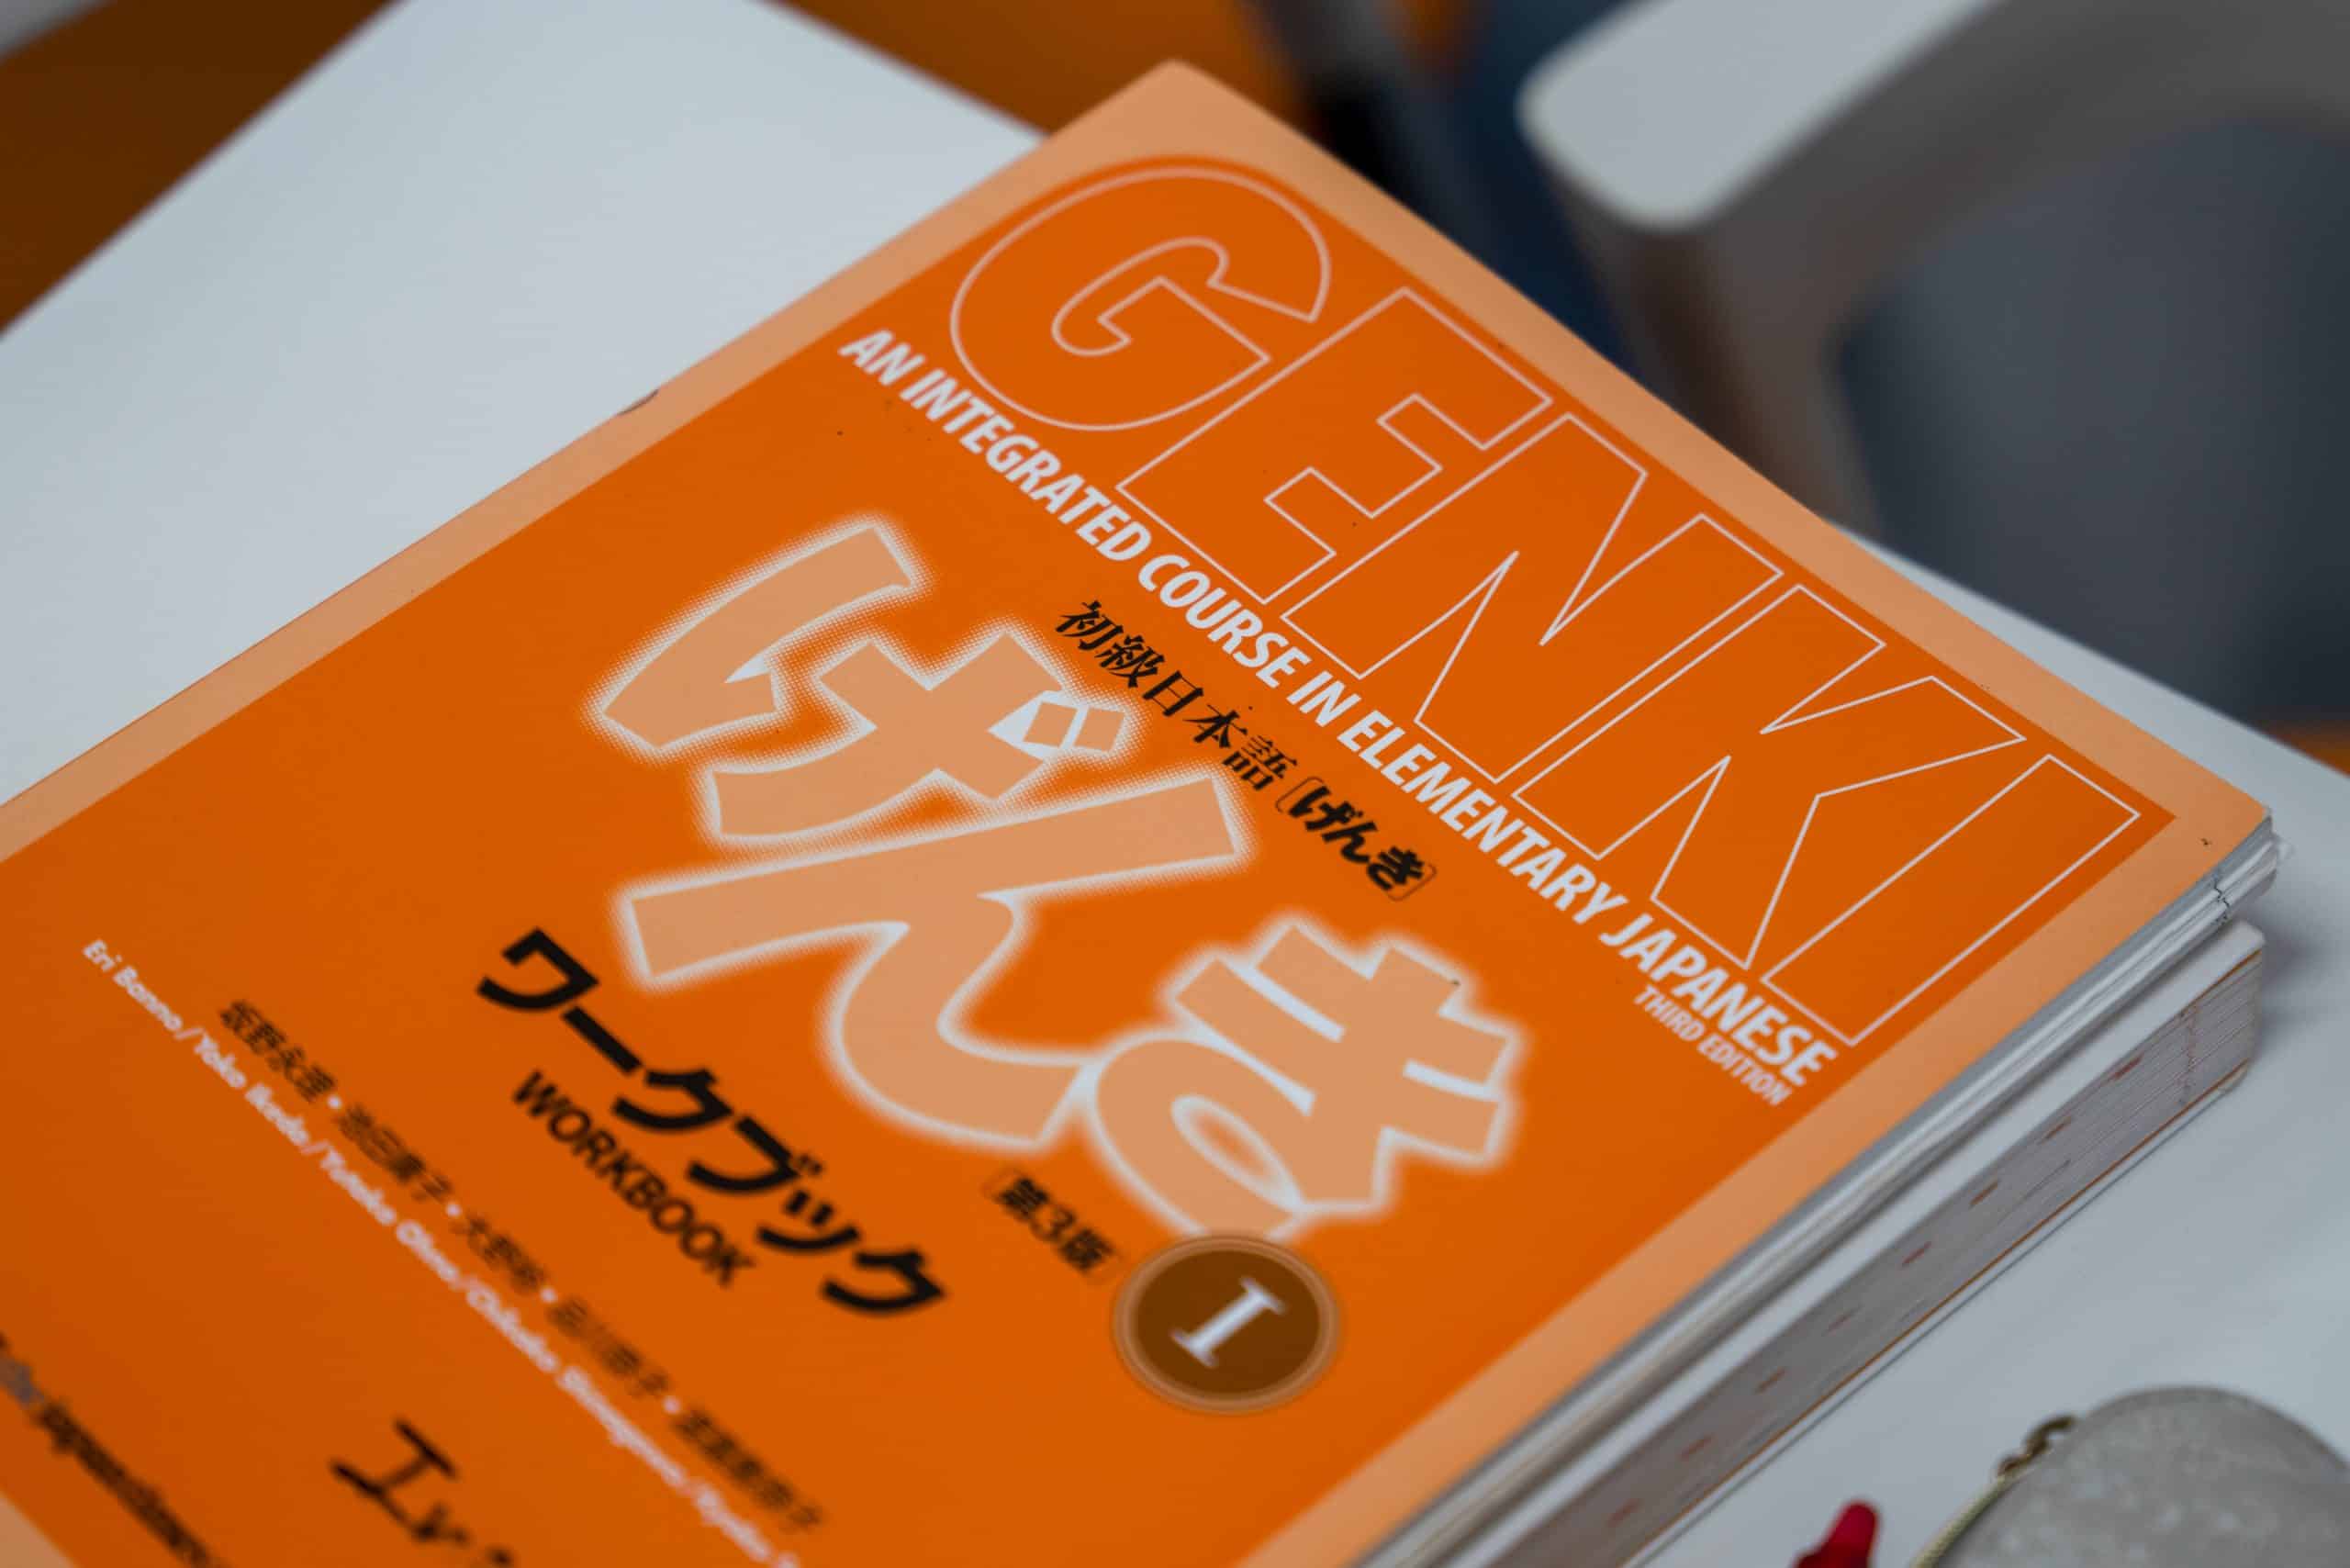 Genki Textbook on a desk